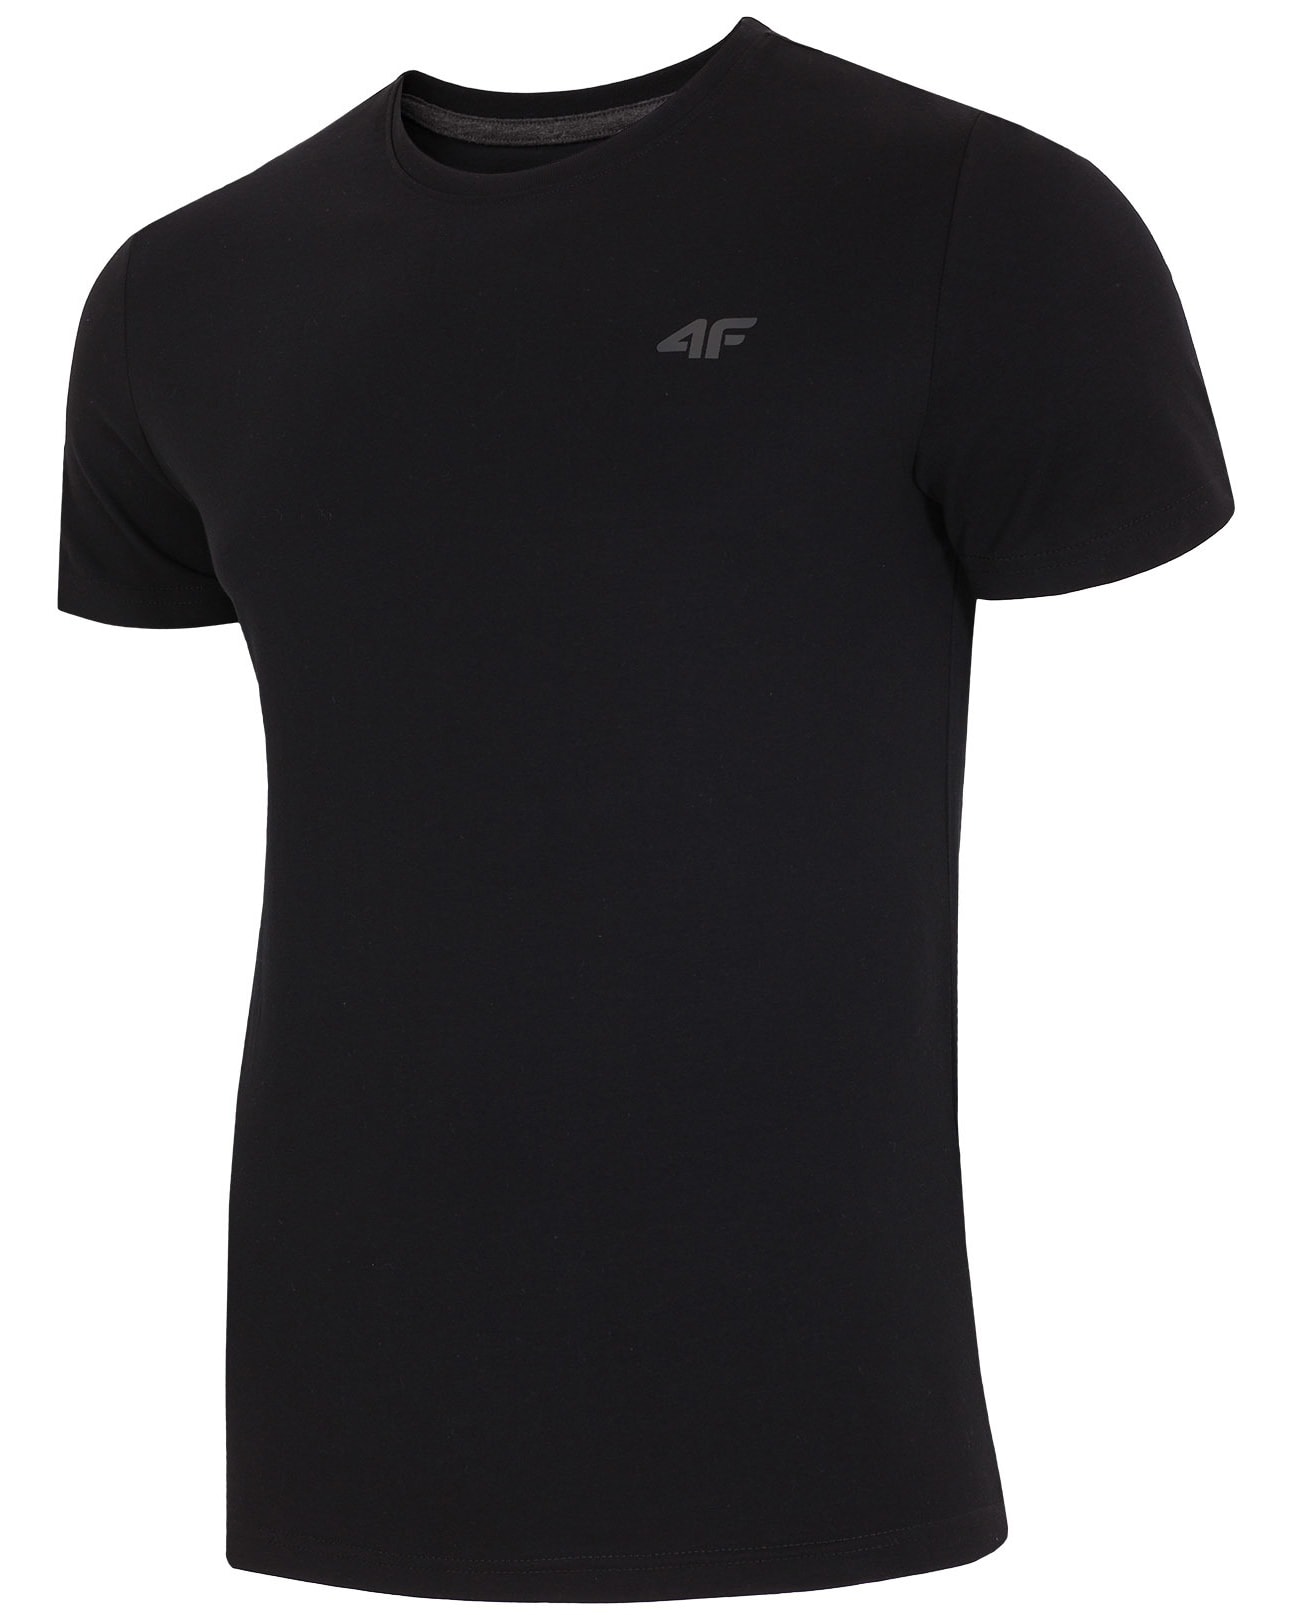 4F Man's T-Shirt - Black